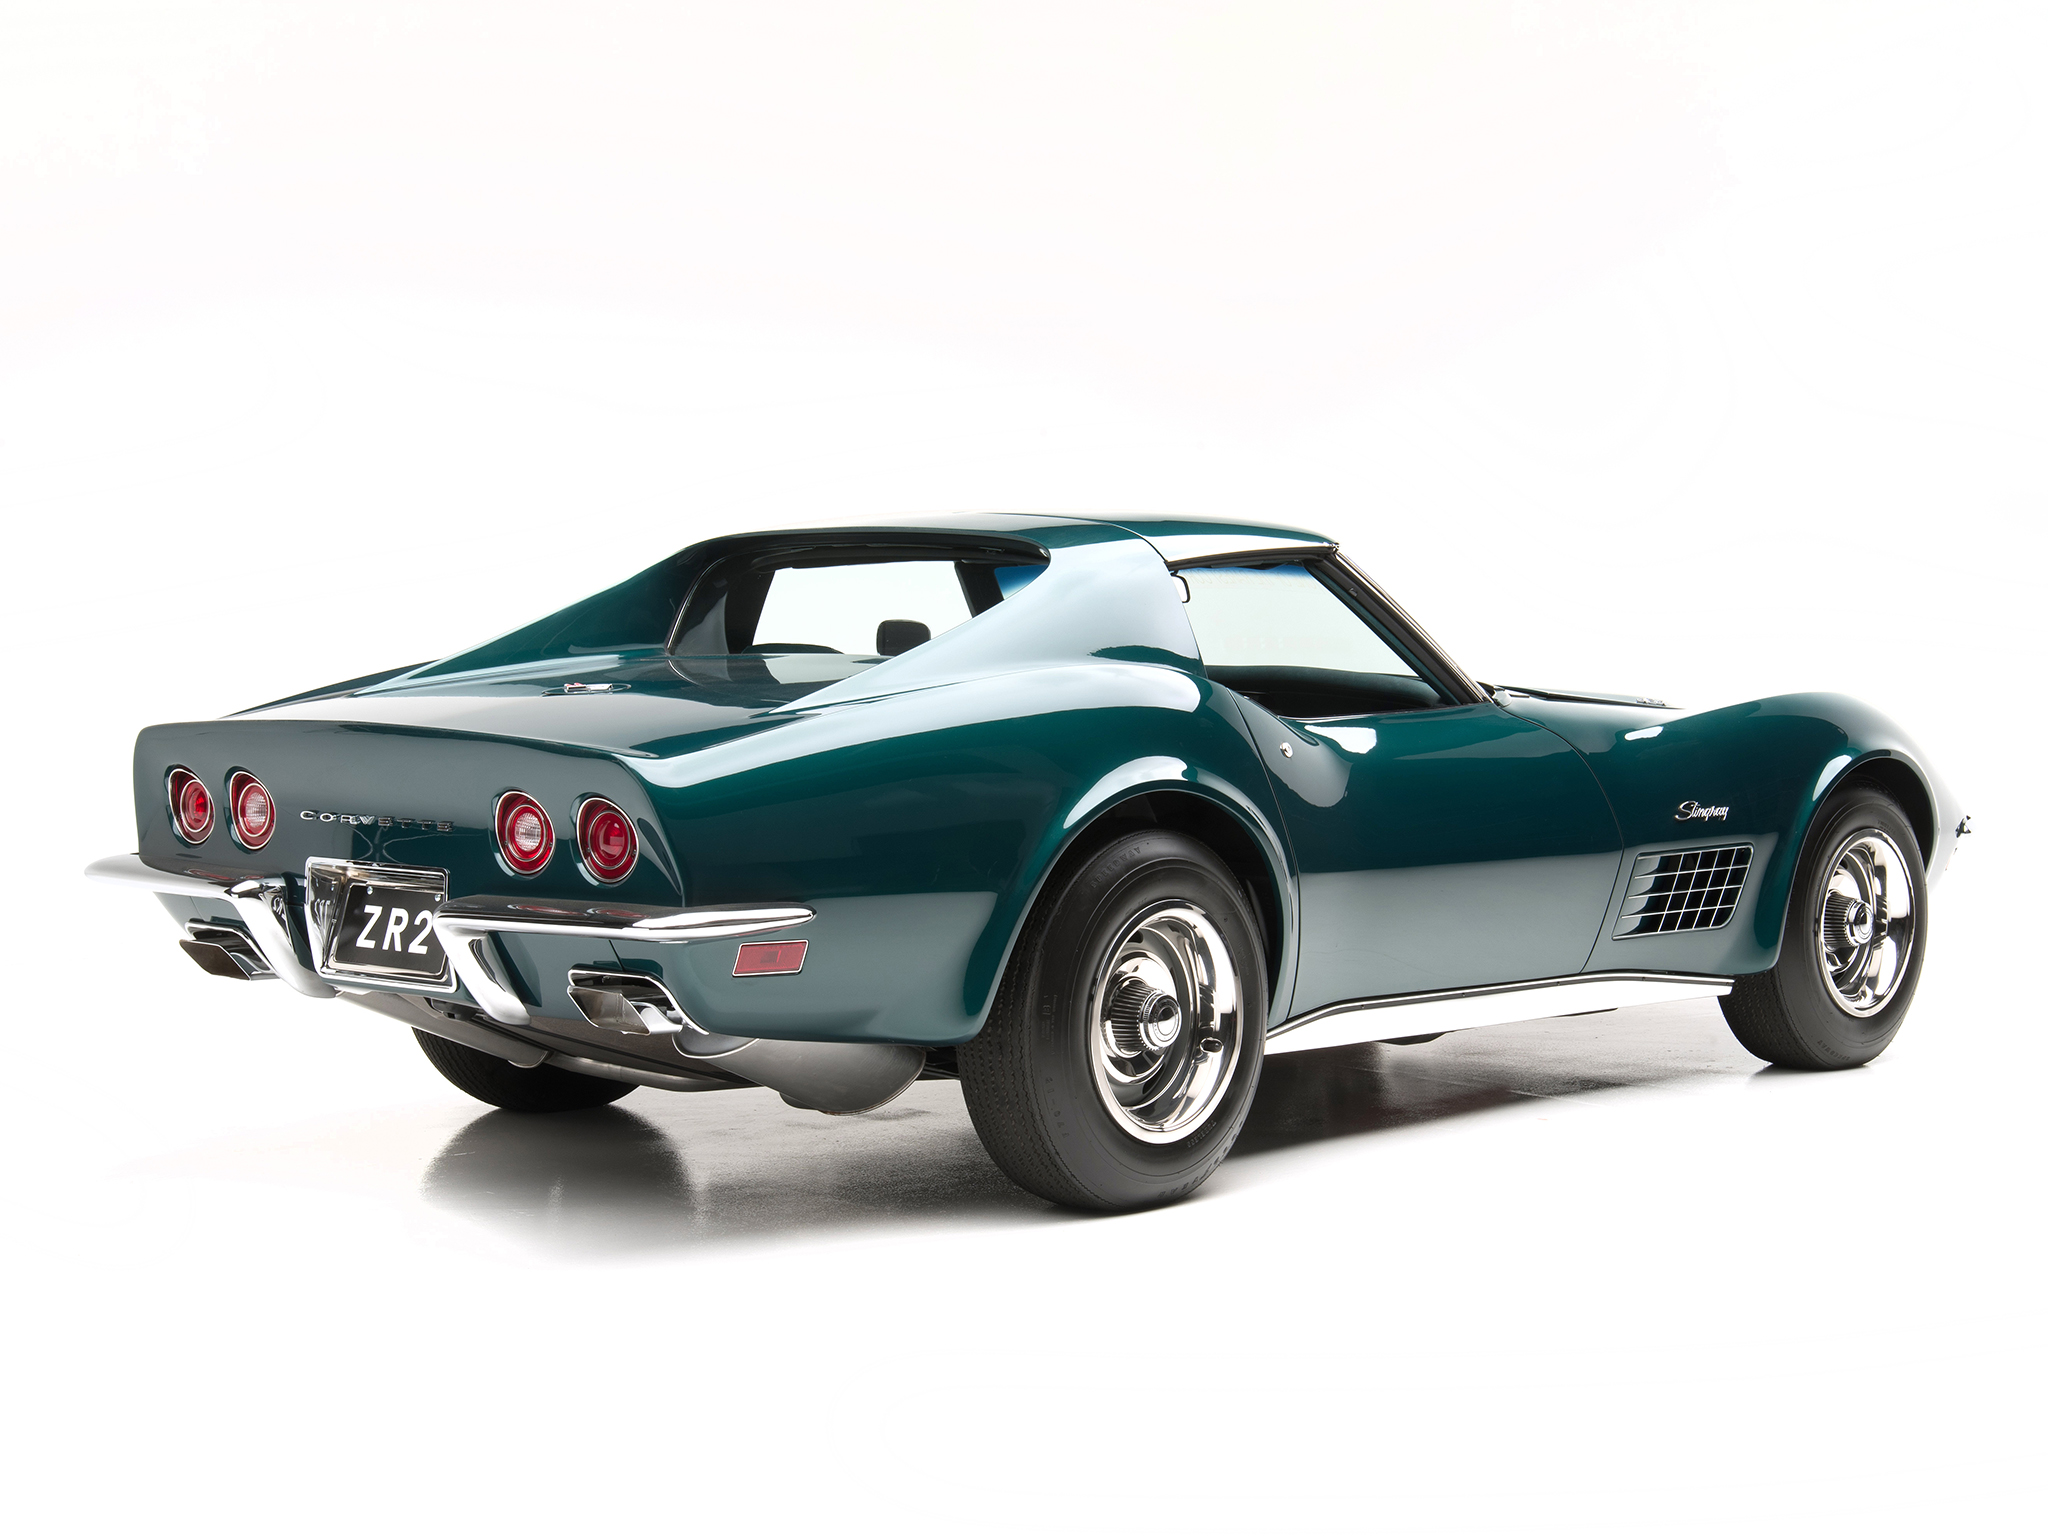 1971, Corvette, Stingray, Zr 2, Ls6, 454, 425hp,  c 3 , Muscle, Supercar, Classic Wallpaper